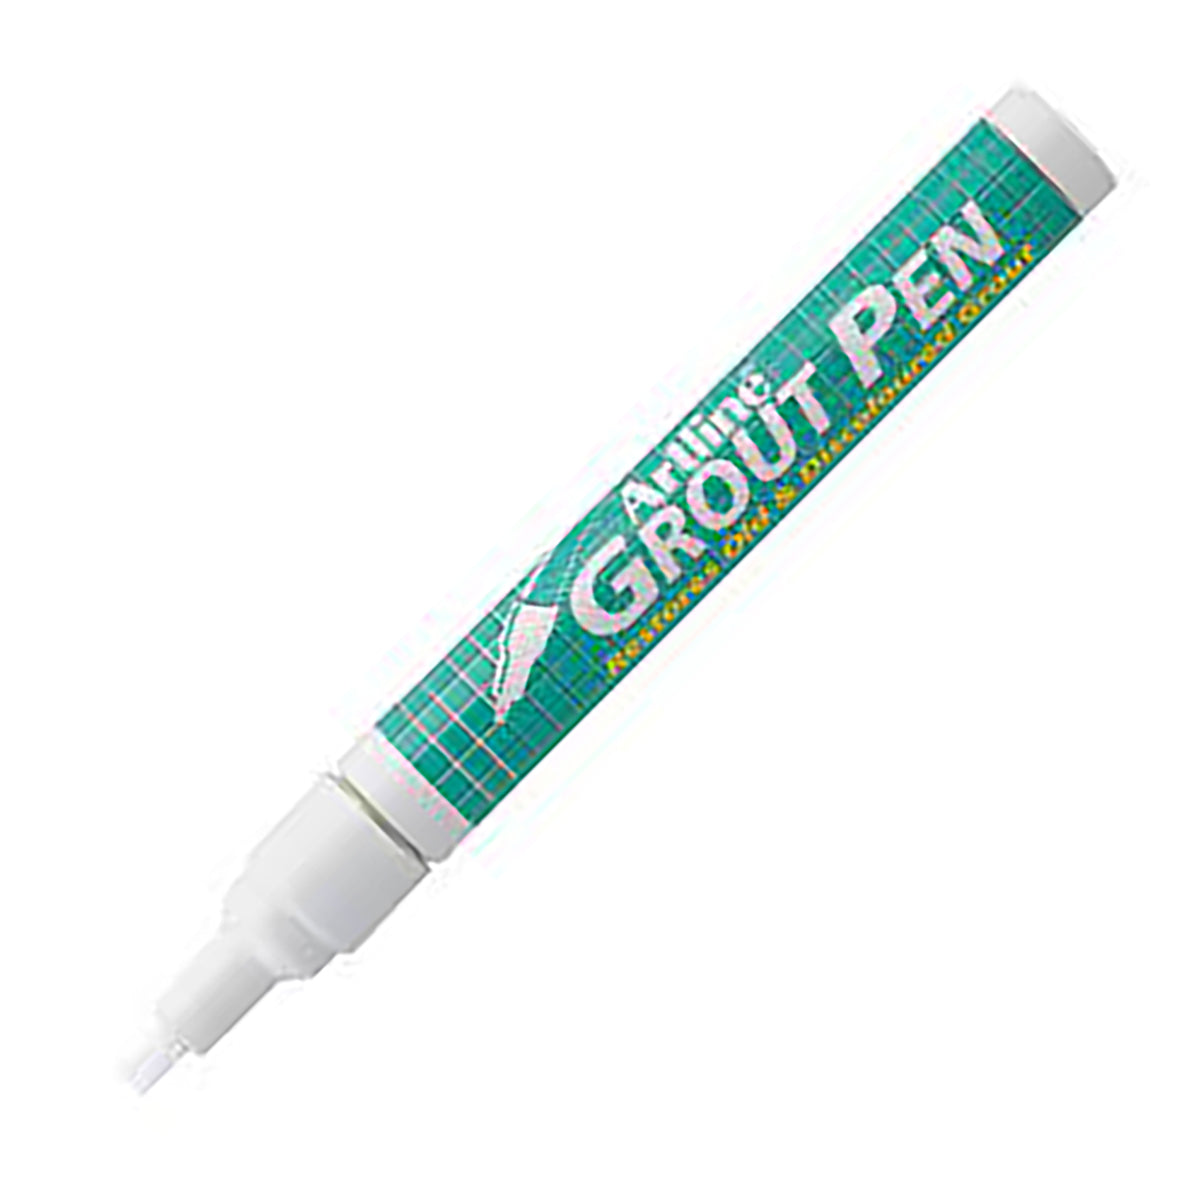 ARTLINE Grout Marker 419 BC-White